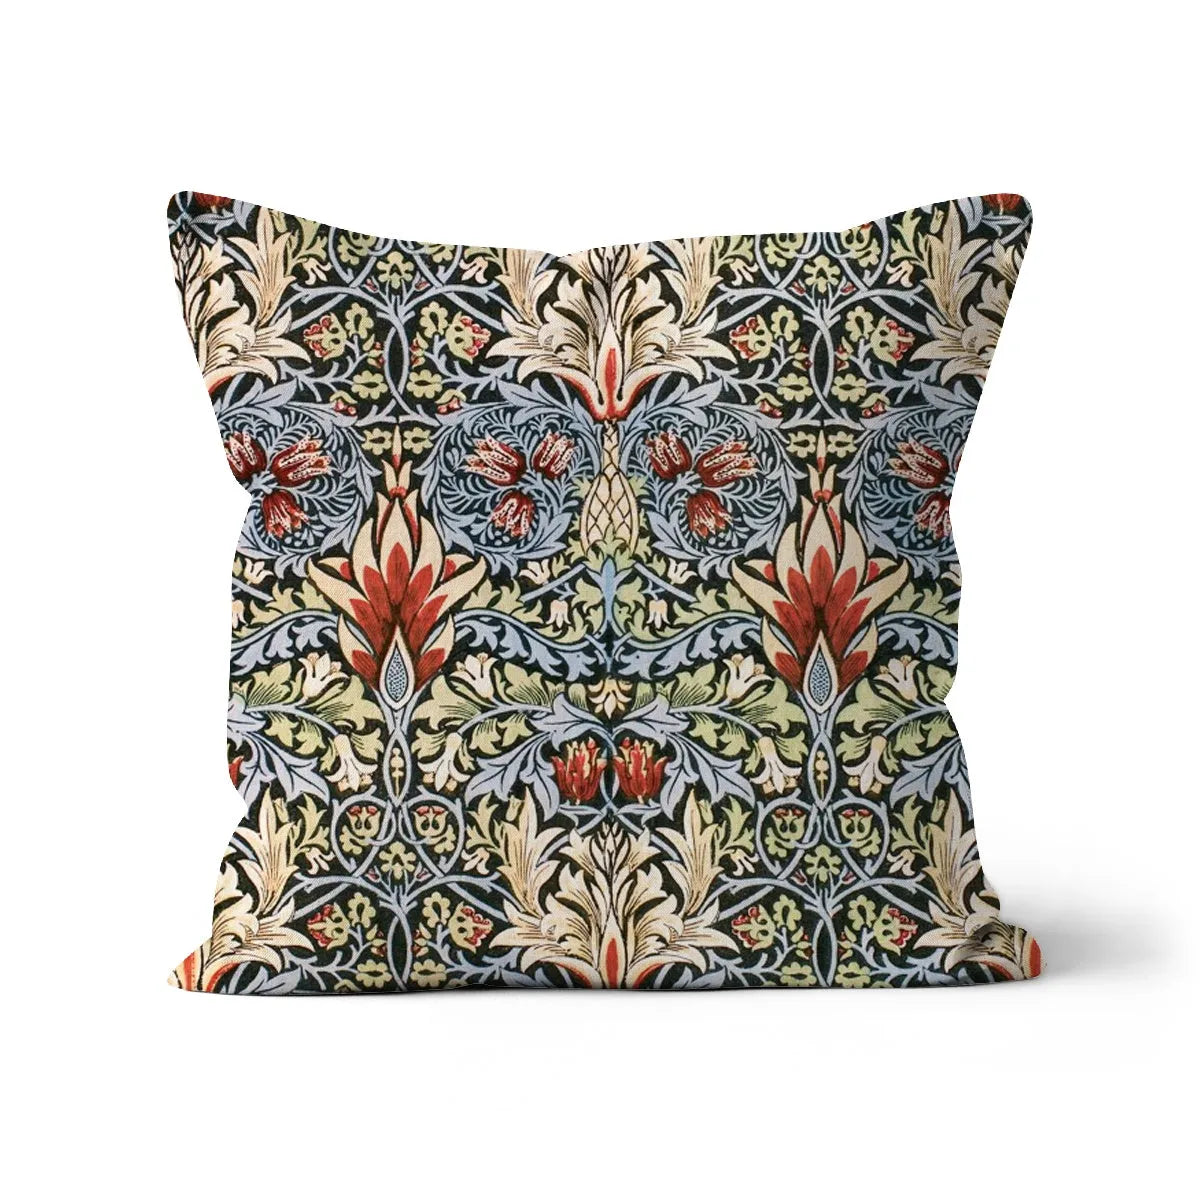 Snakeshead - William Morris Cushion - Decorative Throw Pillow - Linen / 18’x18’ - Throw Pillows - Aesthetic Art